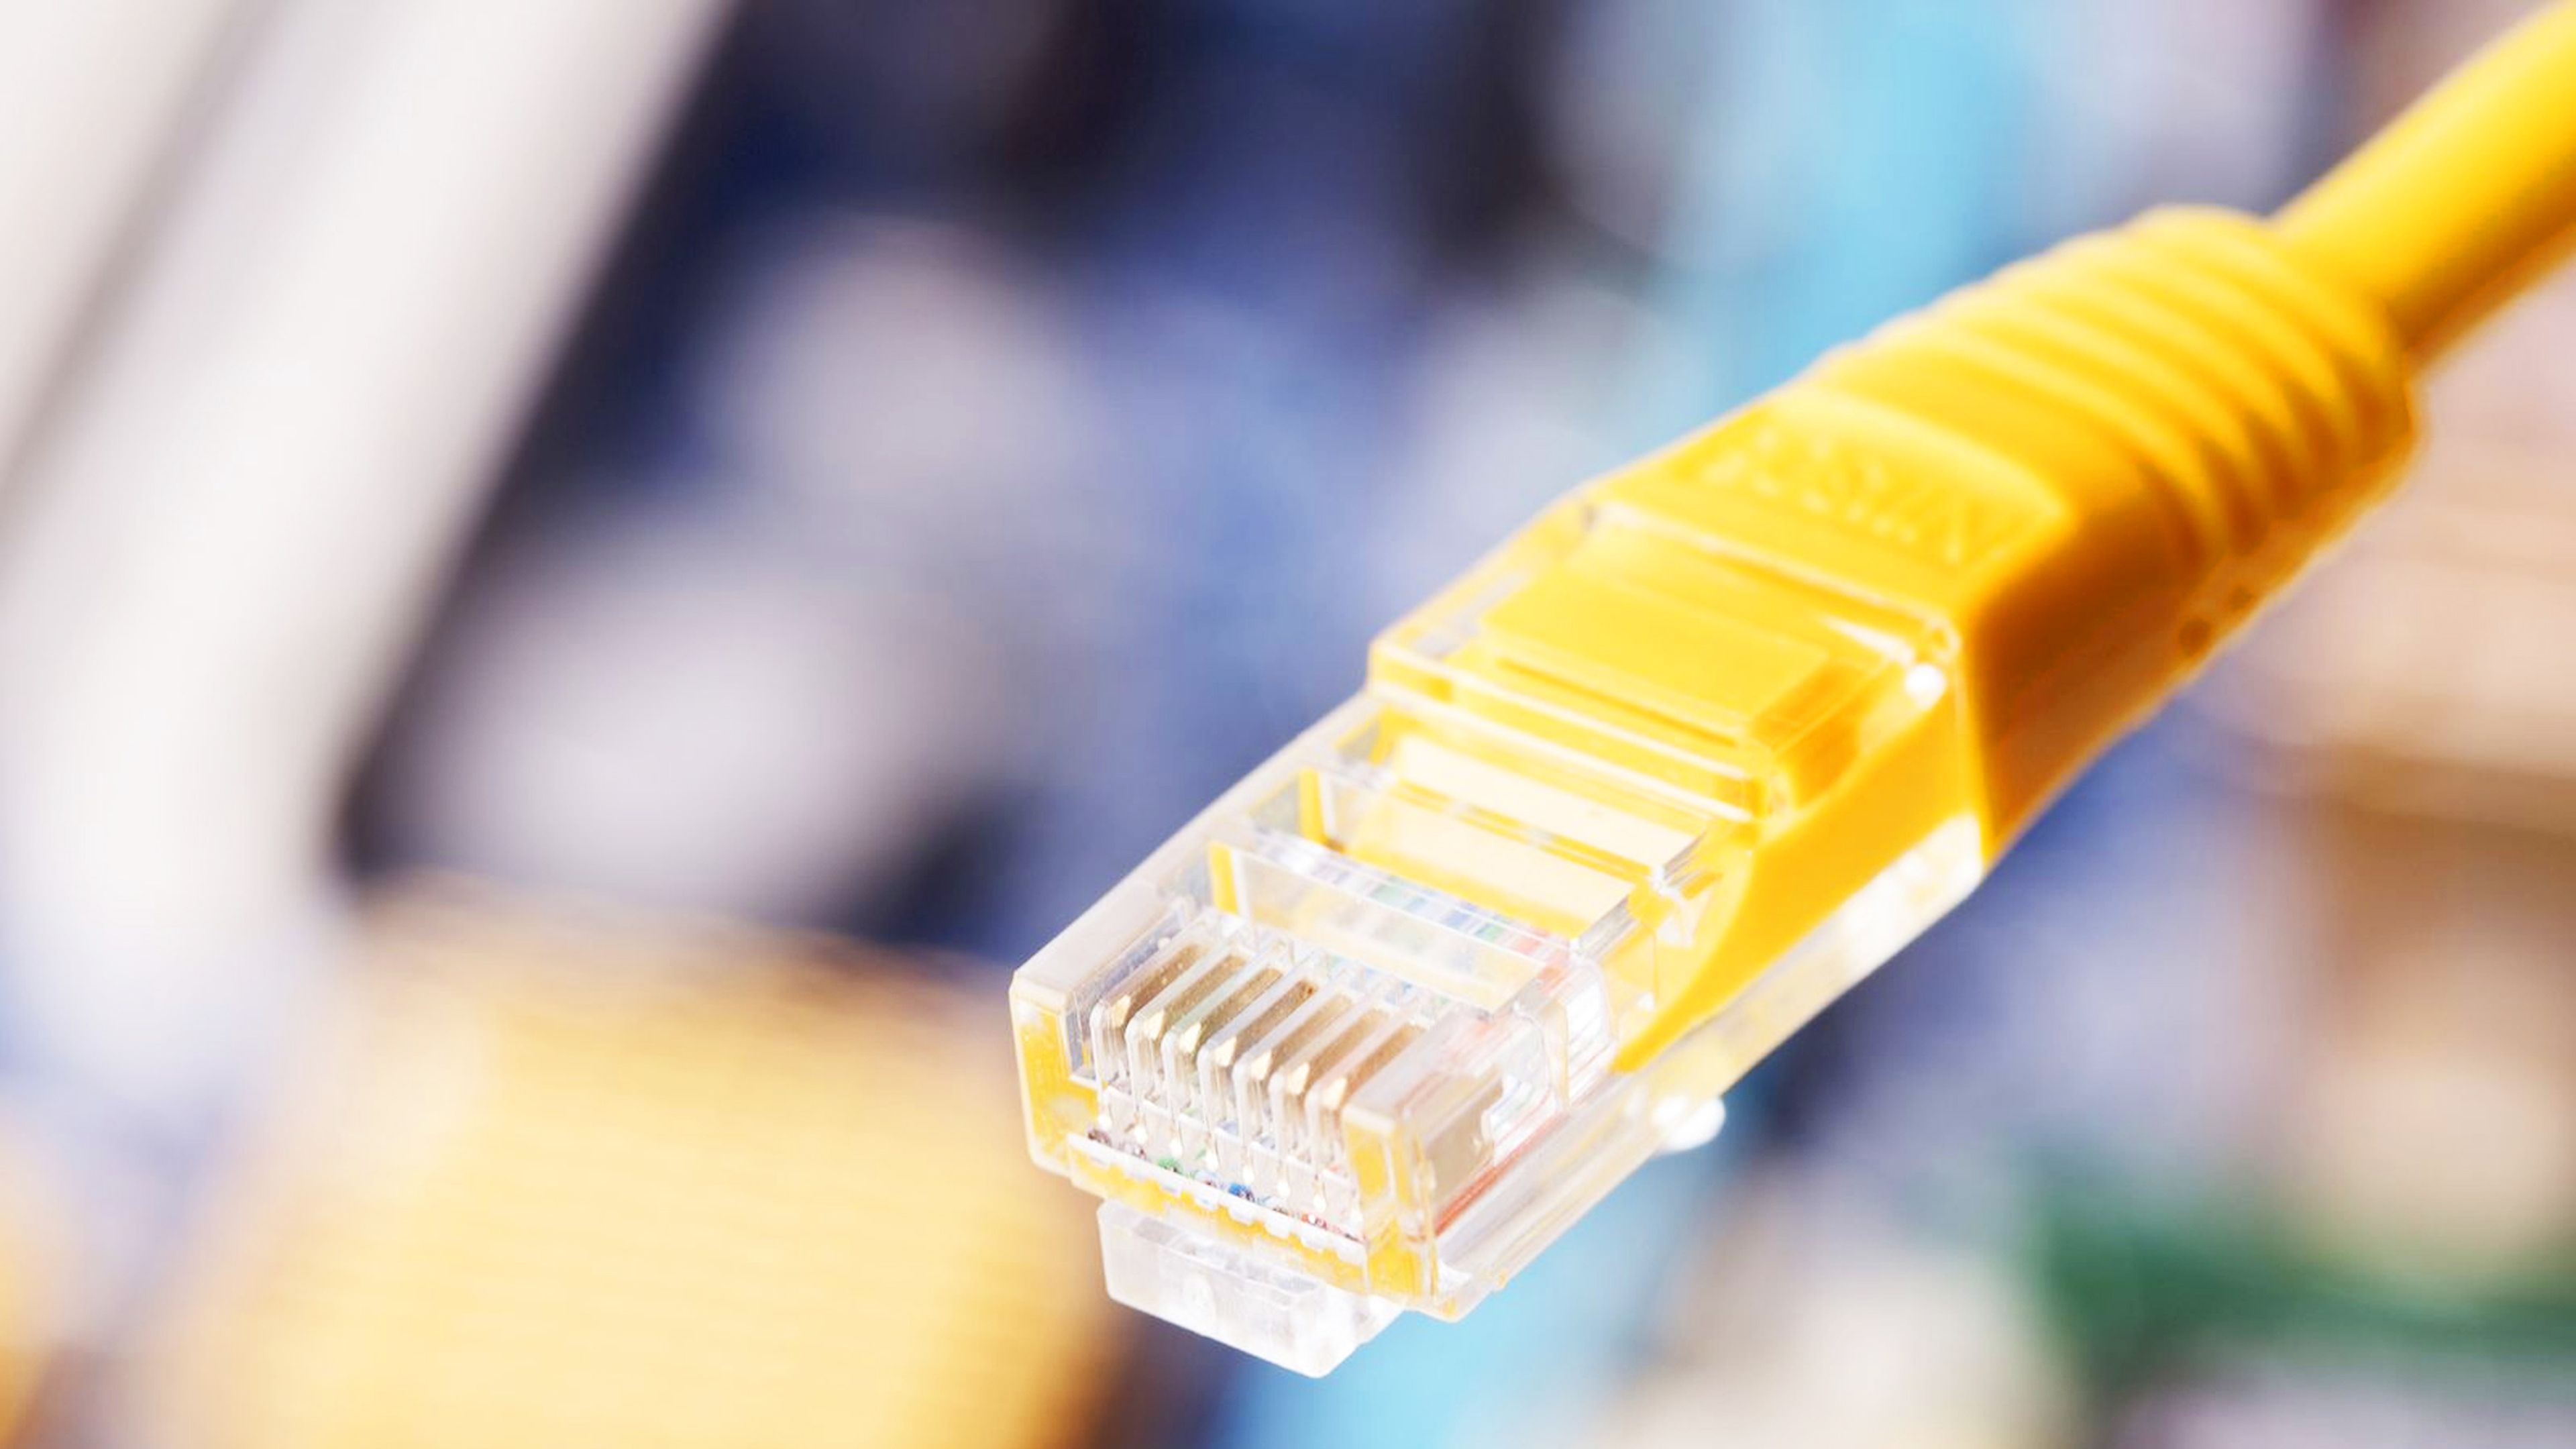 Cómo conectar TV a Internet Wifi vs Ethernet Qué tipo de conexión